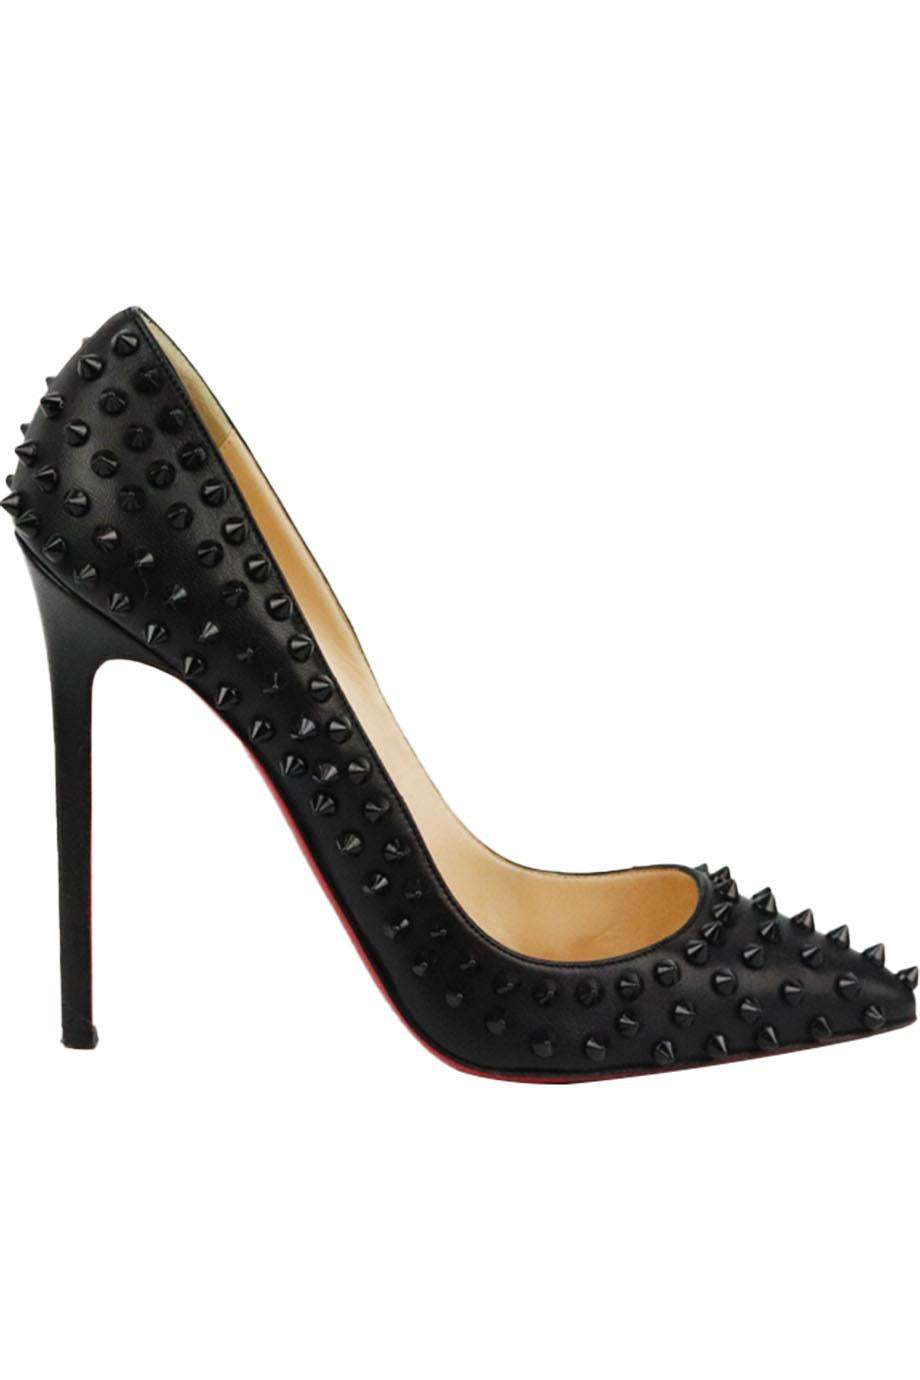 Black Matte Spike Studded High Heels | Tajna Shoes – Tajna Club